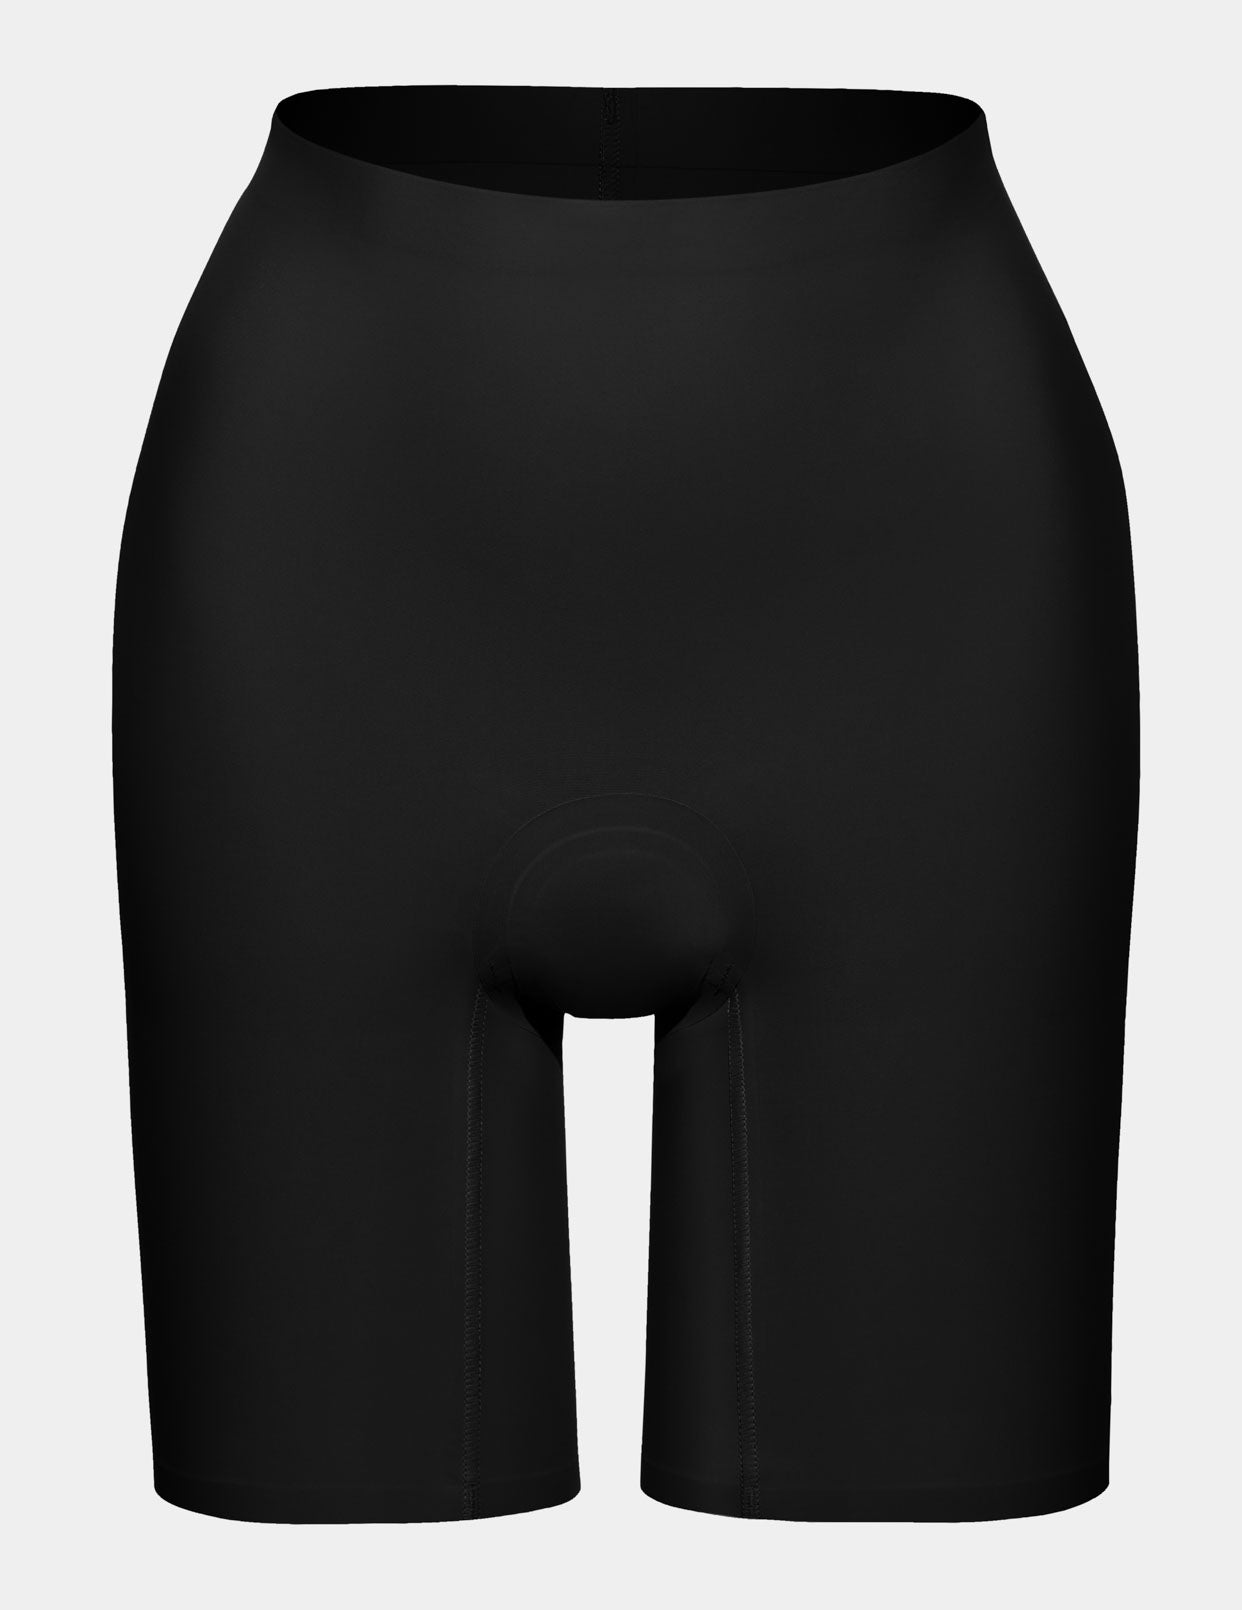 Knix Shortie Thigh Saver Short Black Size XL - $26 (35% Off Retail